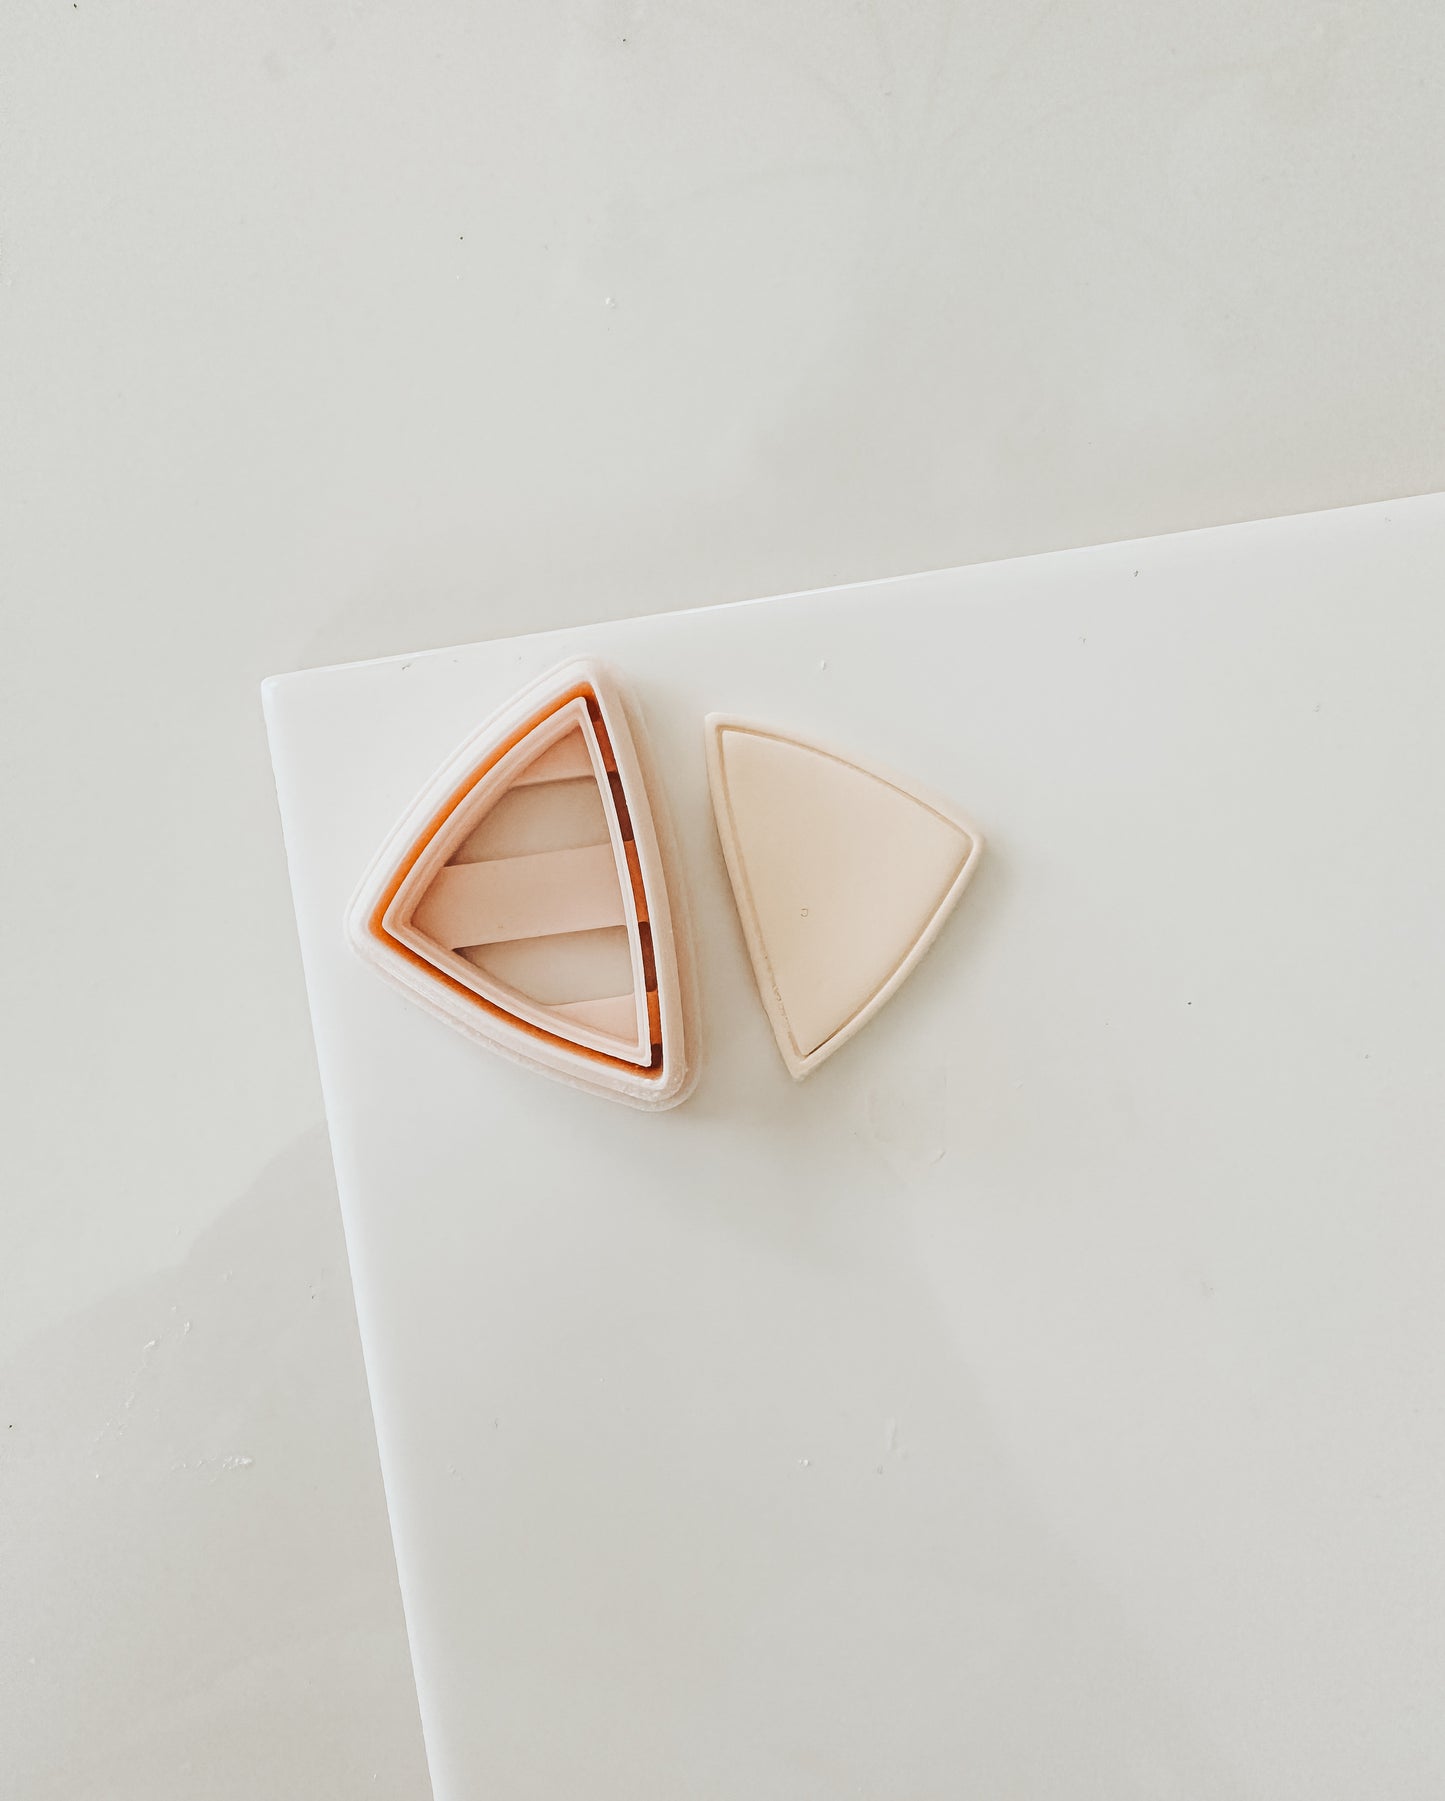 Santana Bordered Oblong Triangle Clay Cutter 1.50”